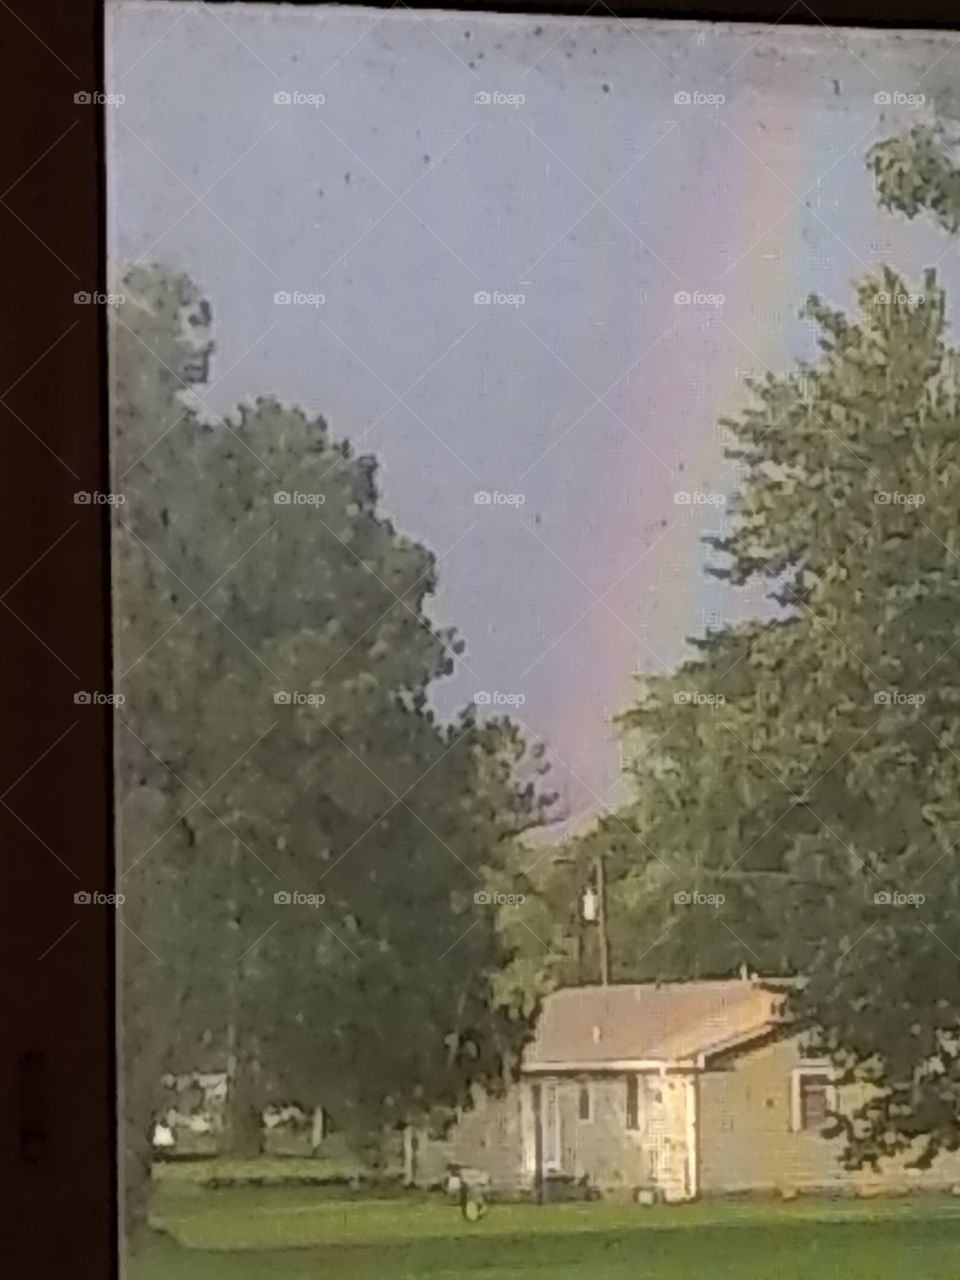 the rainbow down the street